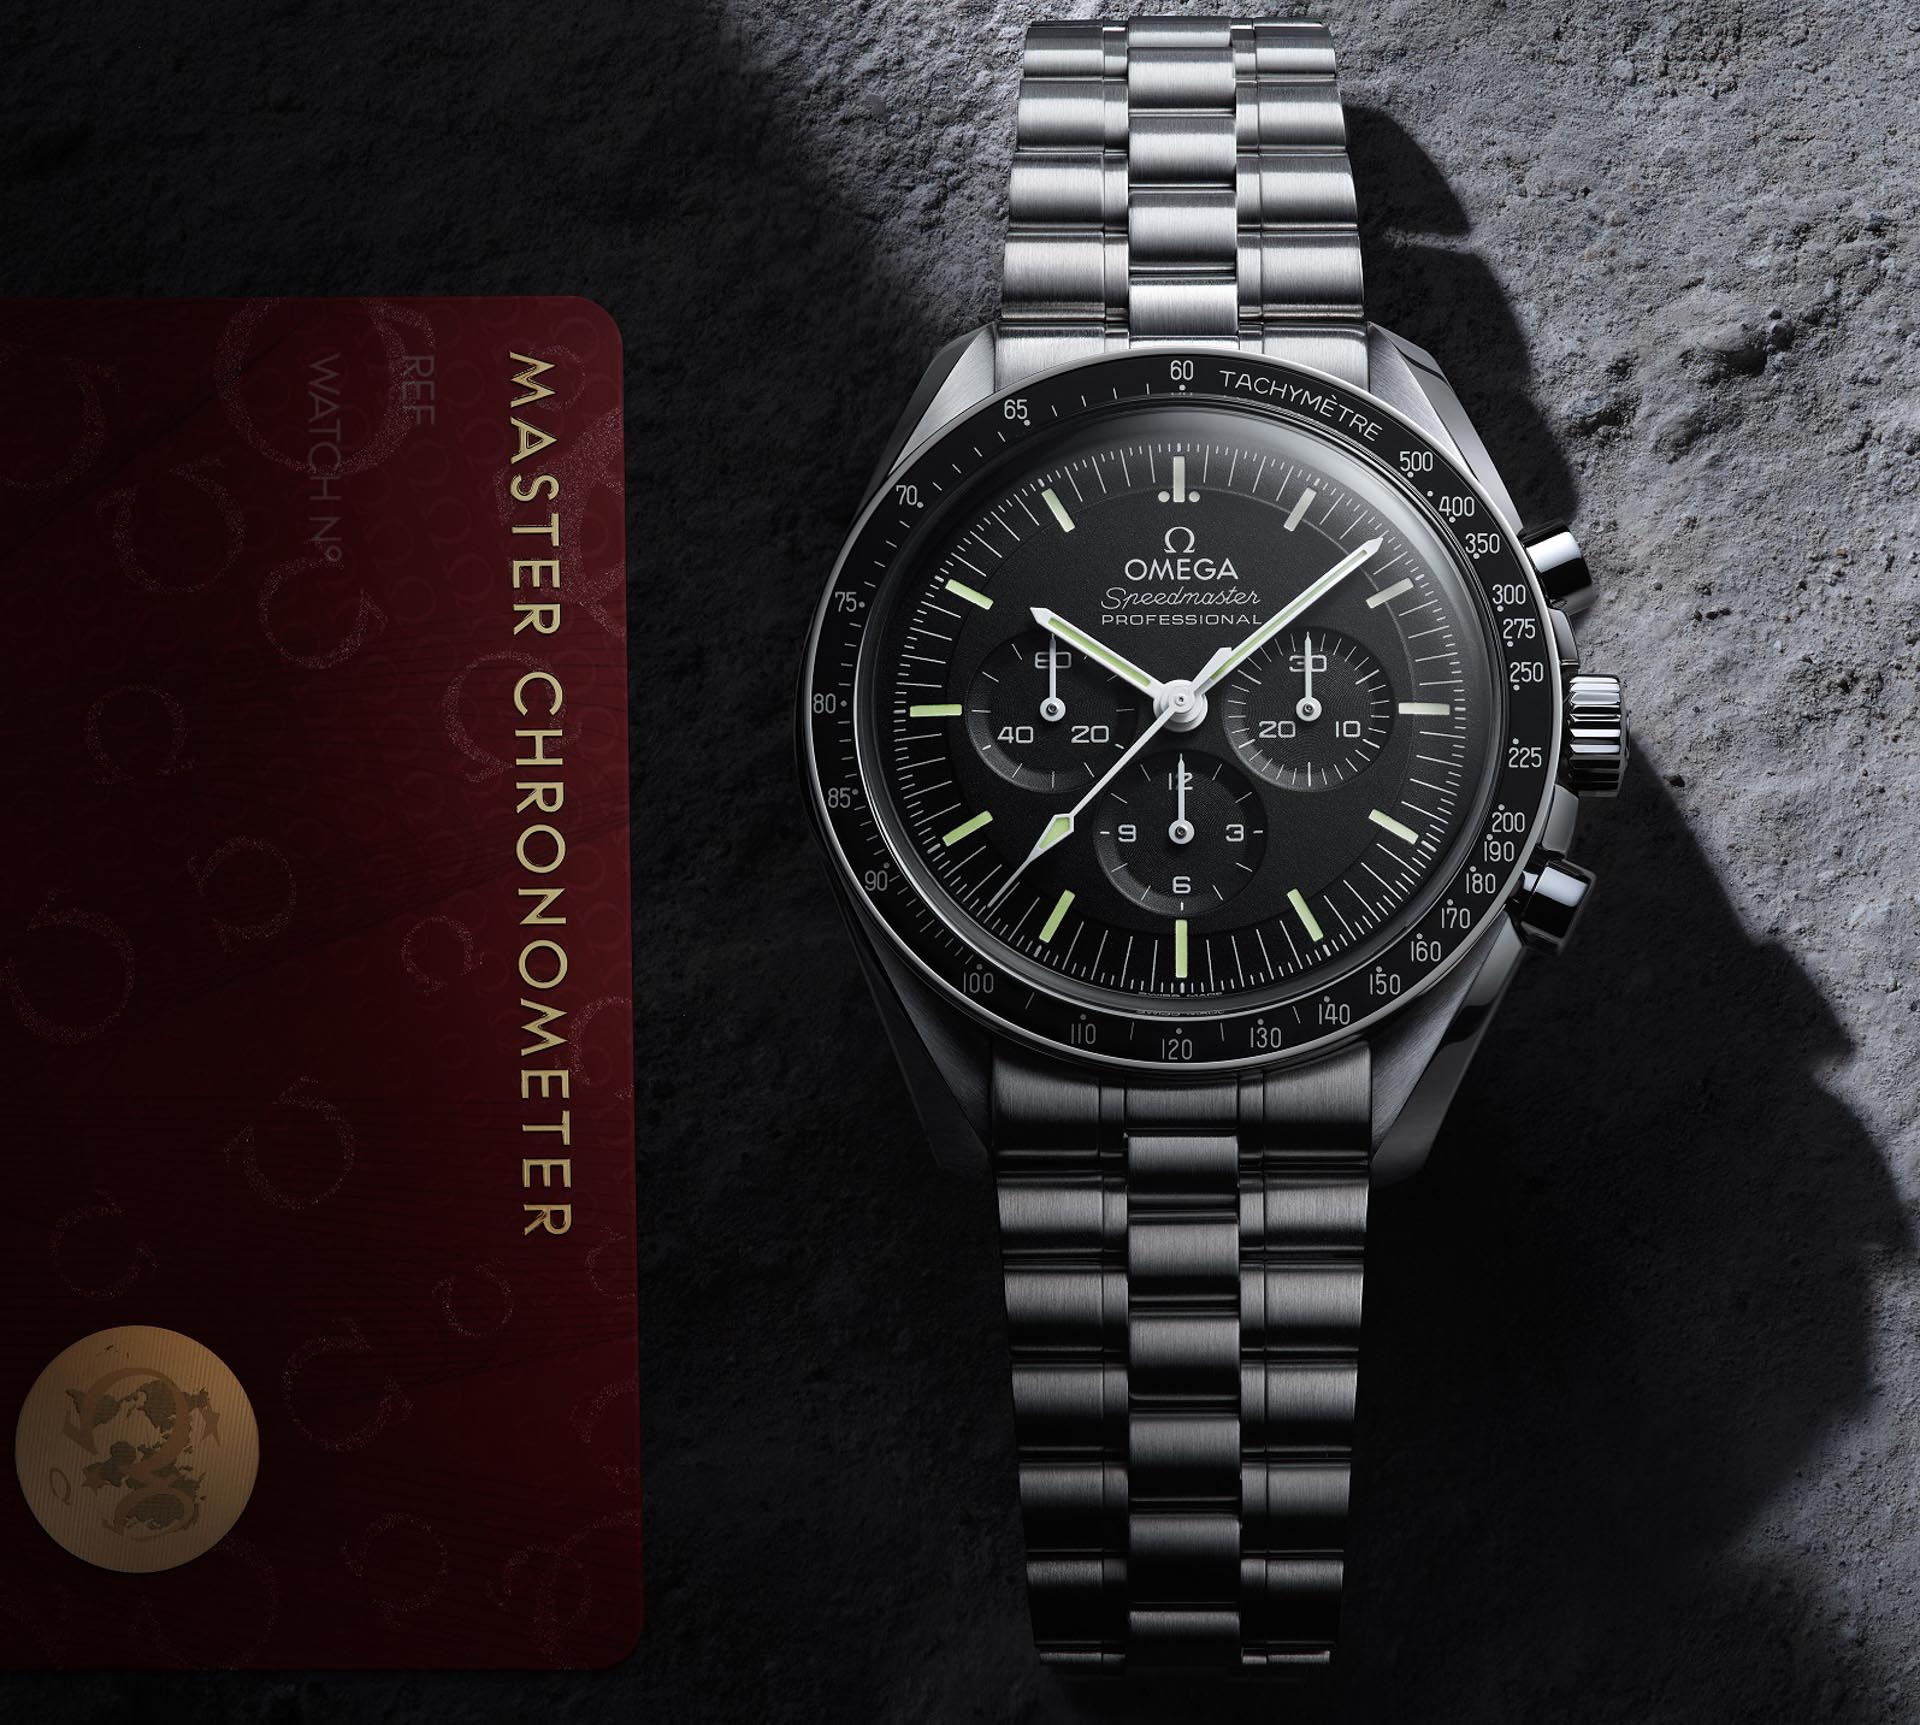 omega superlative chronometer officially certified